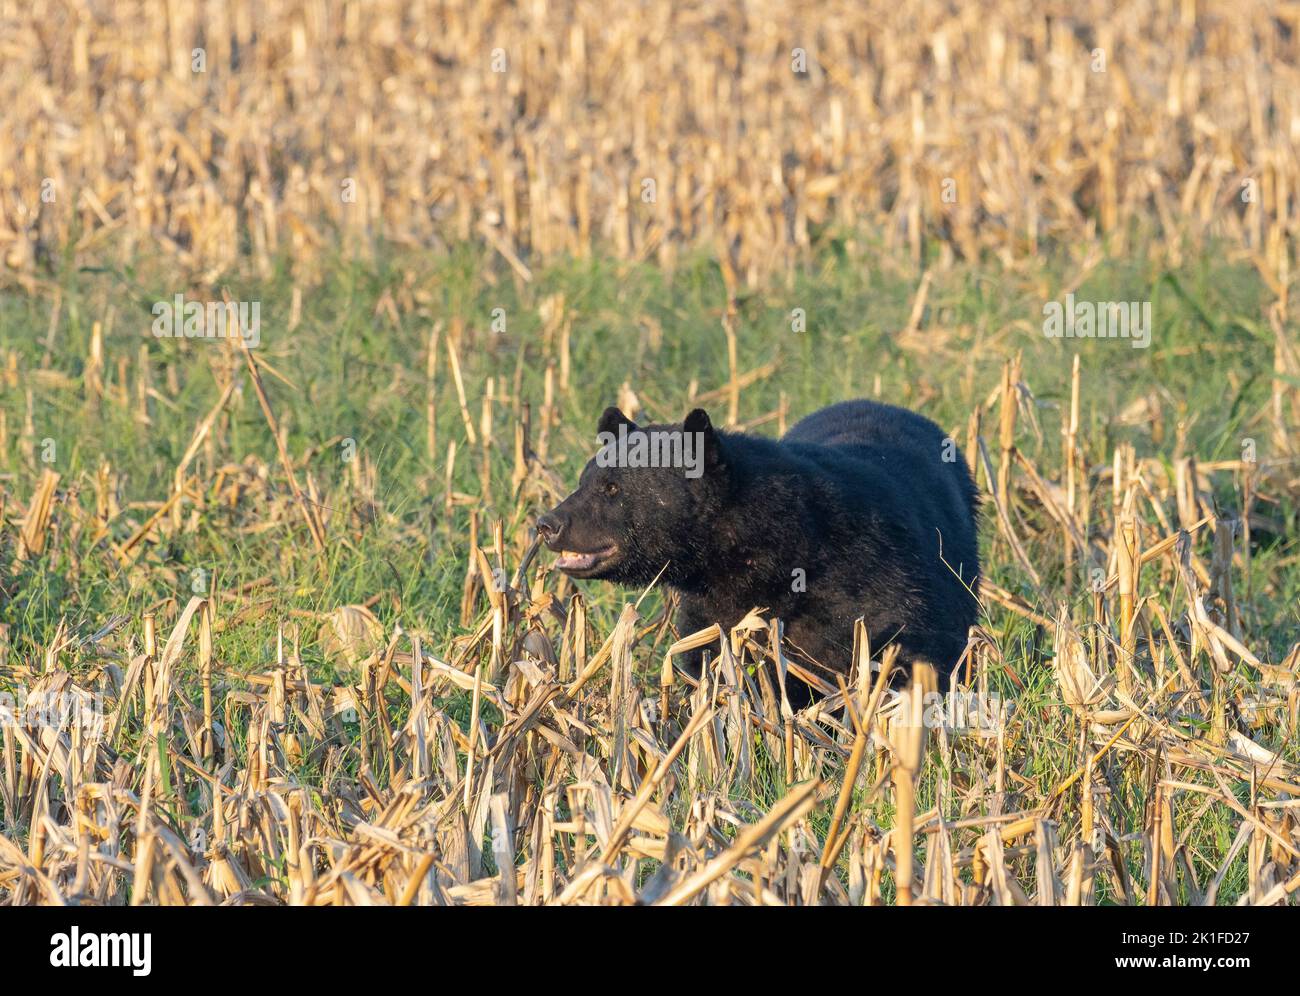 American Black Bear (Ursus americanus) browsing in cornfield Stock Photo